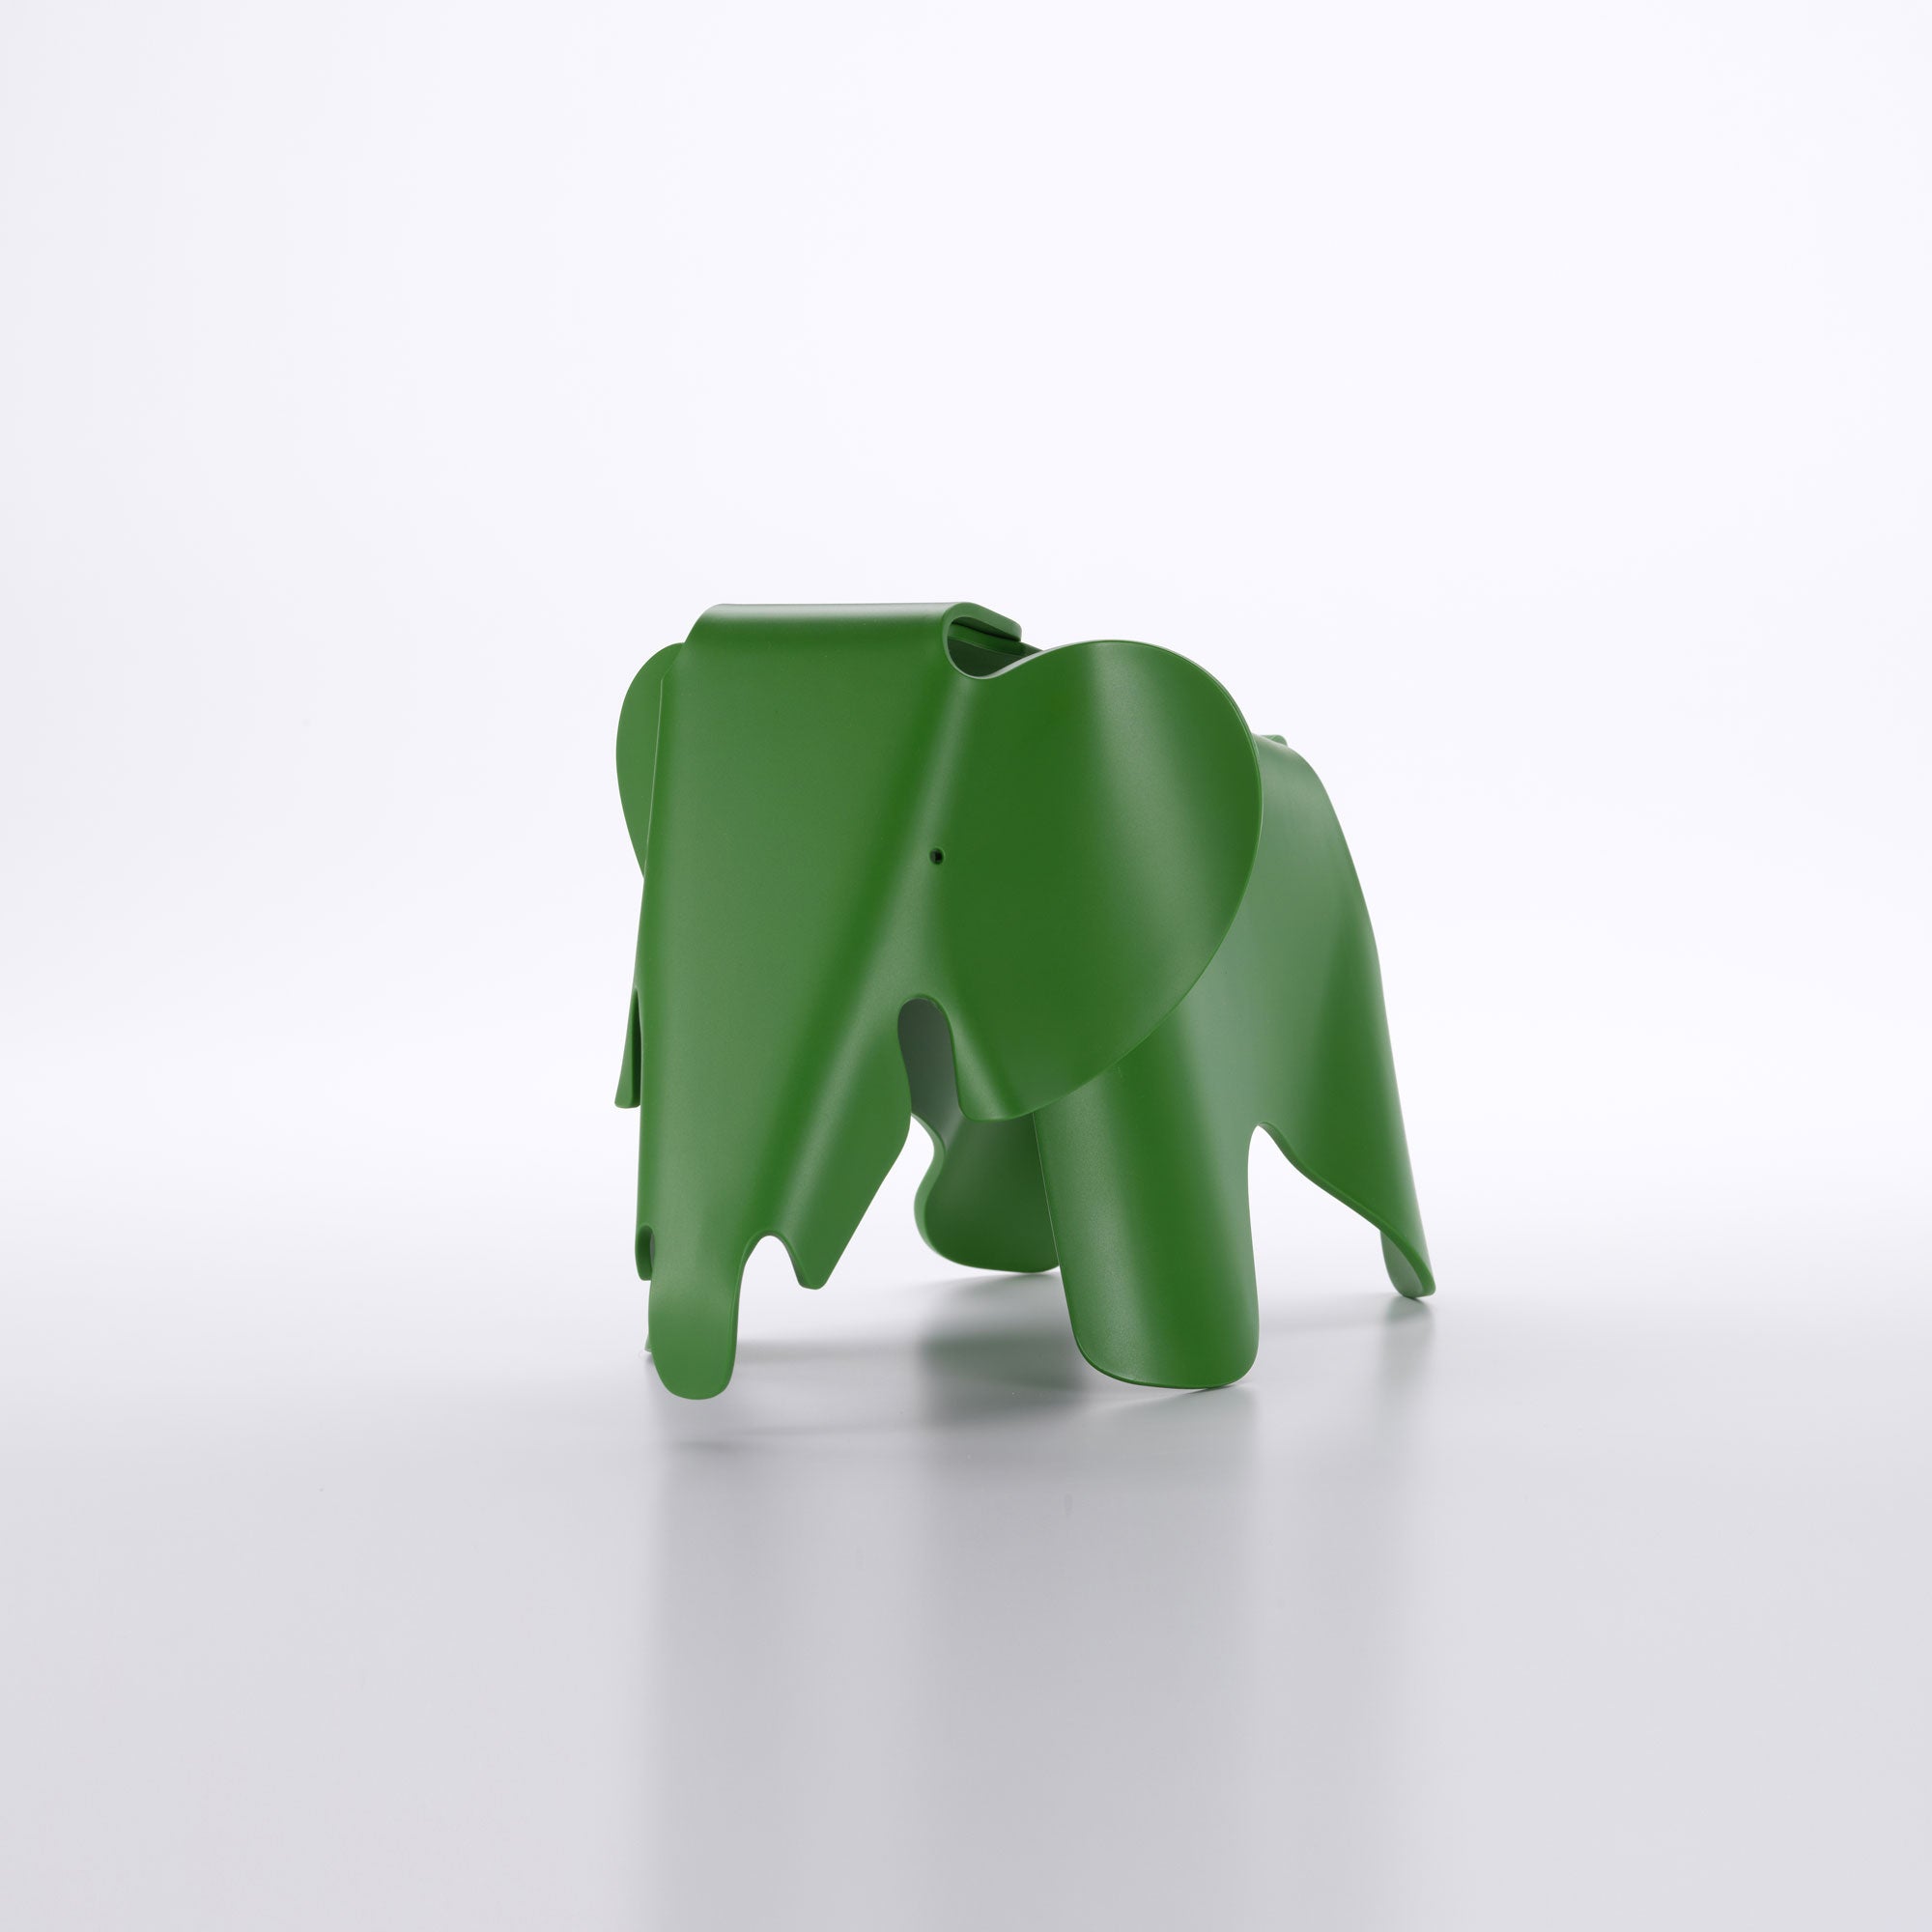 Eames Elephant S obiect decor